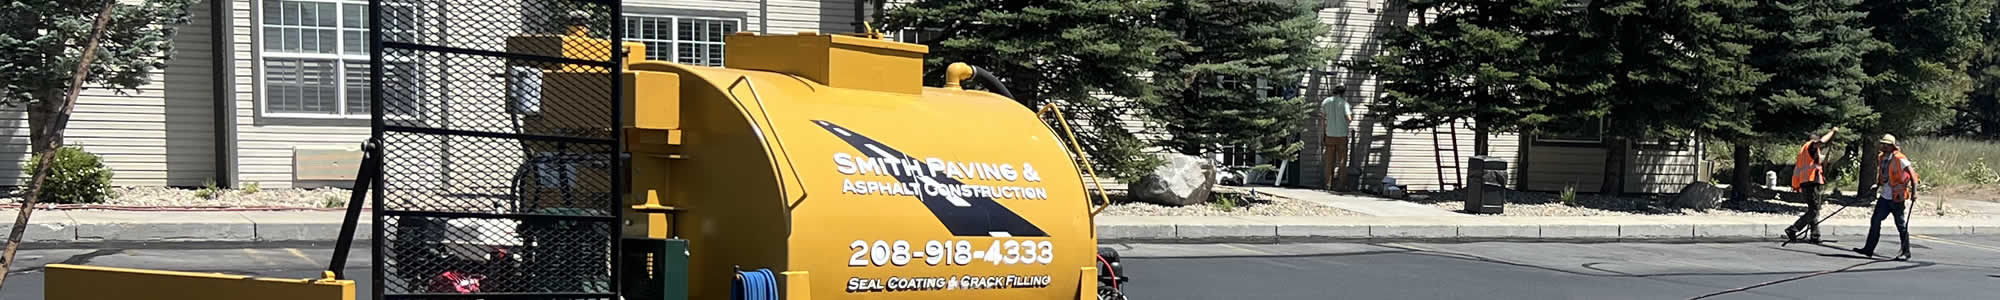 Professional Asphalt Paving Services in Idaho